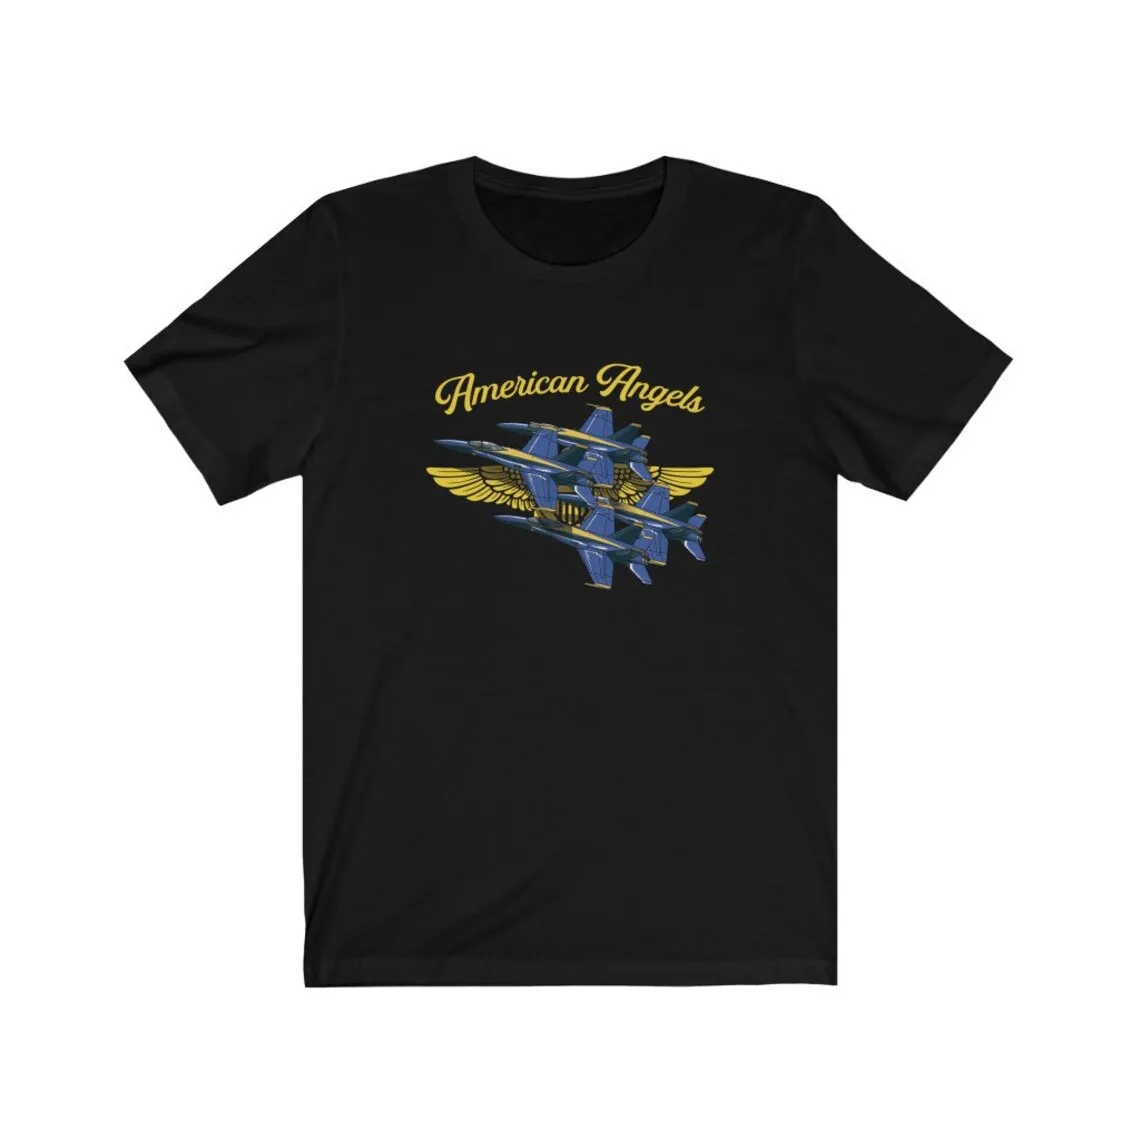 

Navy Blue Angels Flight Demonstration Squadron T-Shirt 100% Cotton O-Neck Summer Short Sleeve Casual Mens T-shirt Size S-3XL